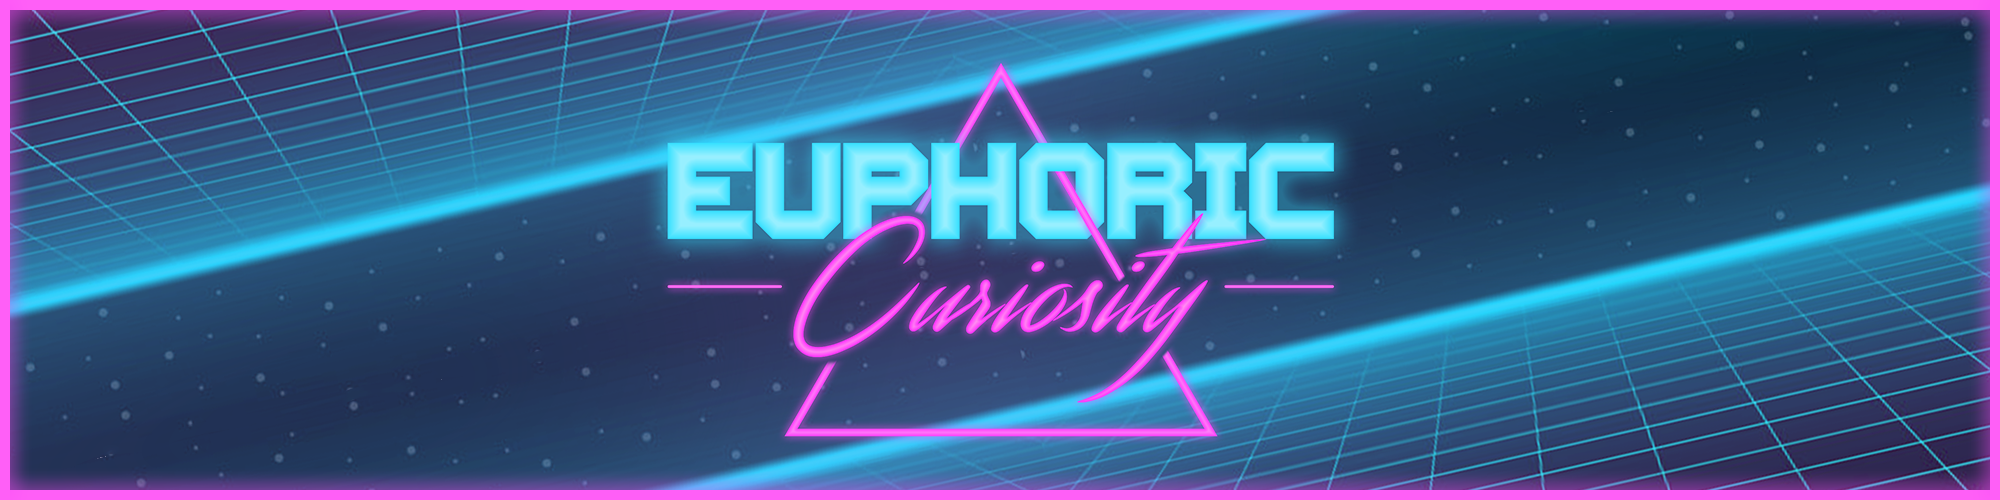 Install Euphoric Curiosity Minecraft Mods And Modpacks Curseforge